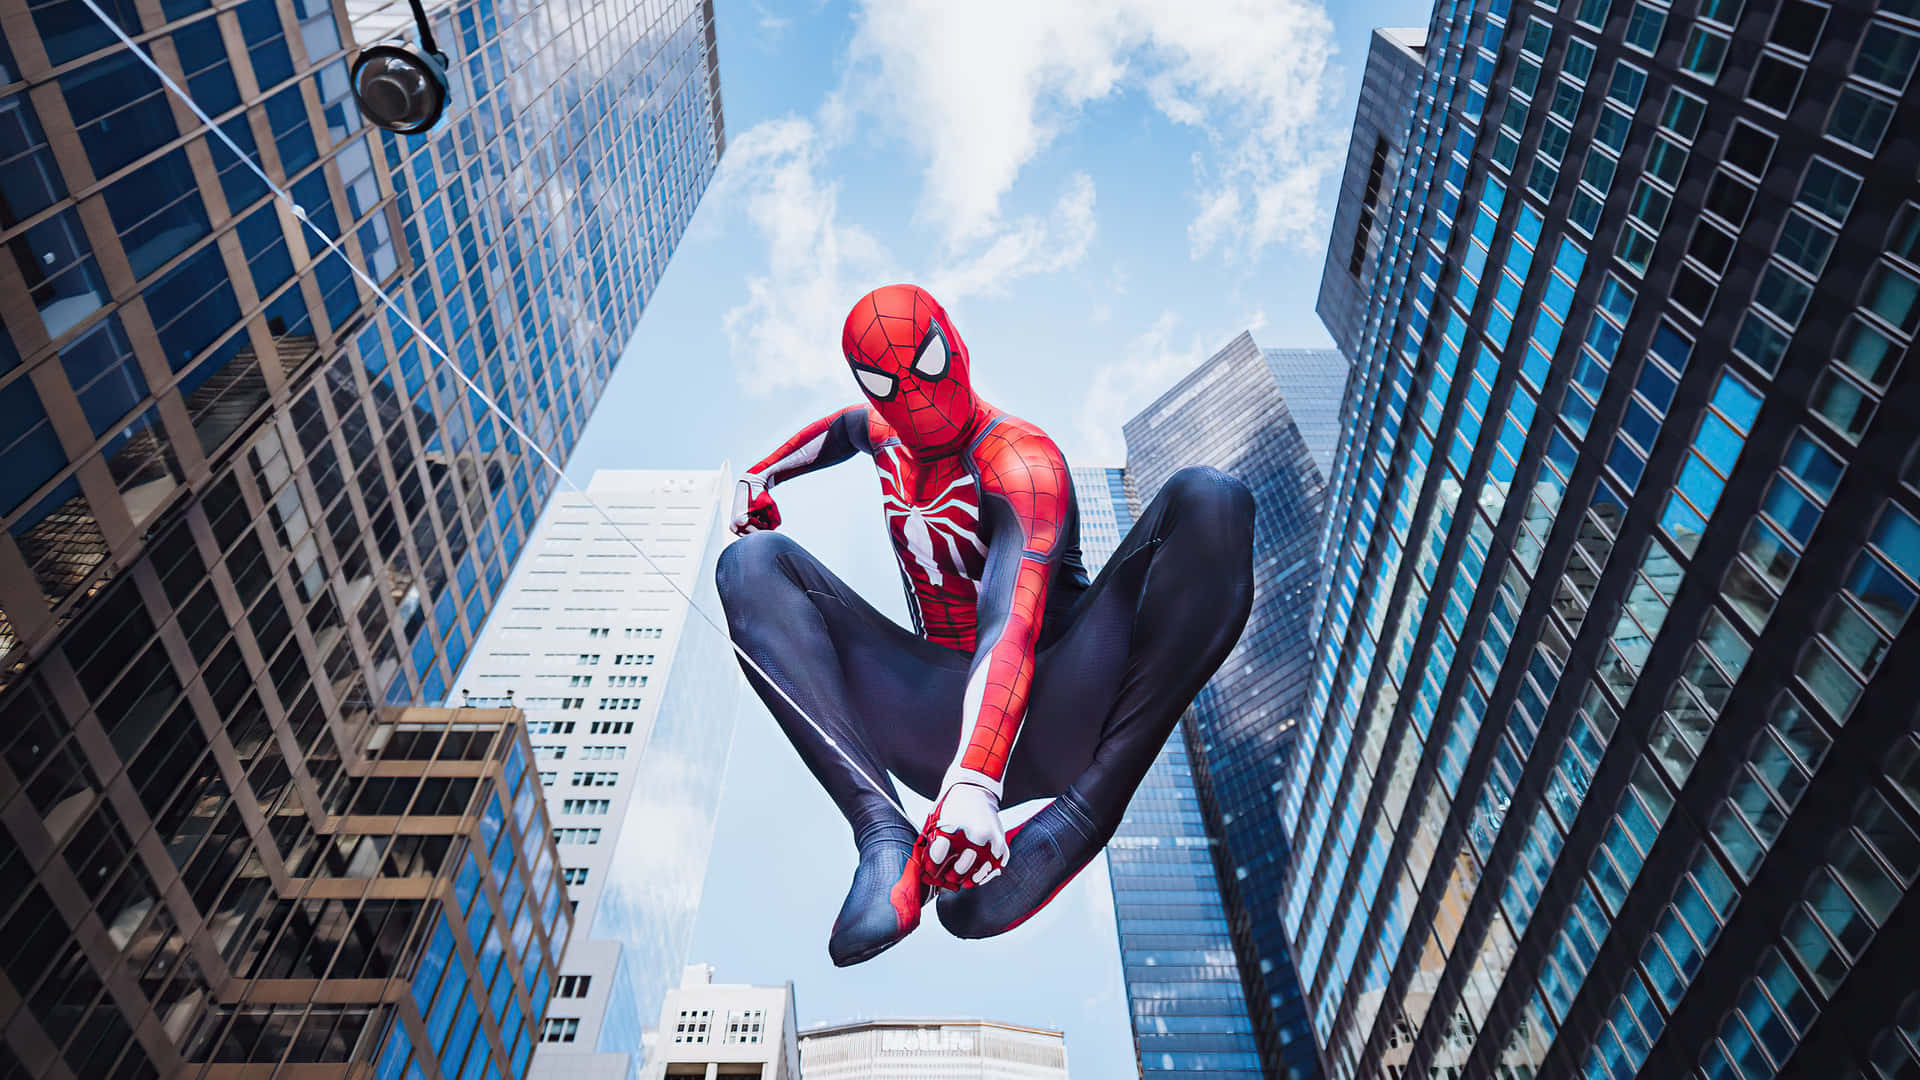 Cool Marvel Superhero Spiderman Background